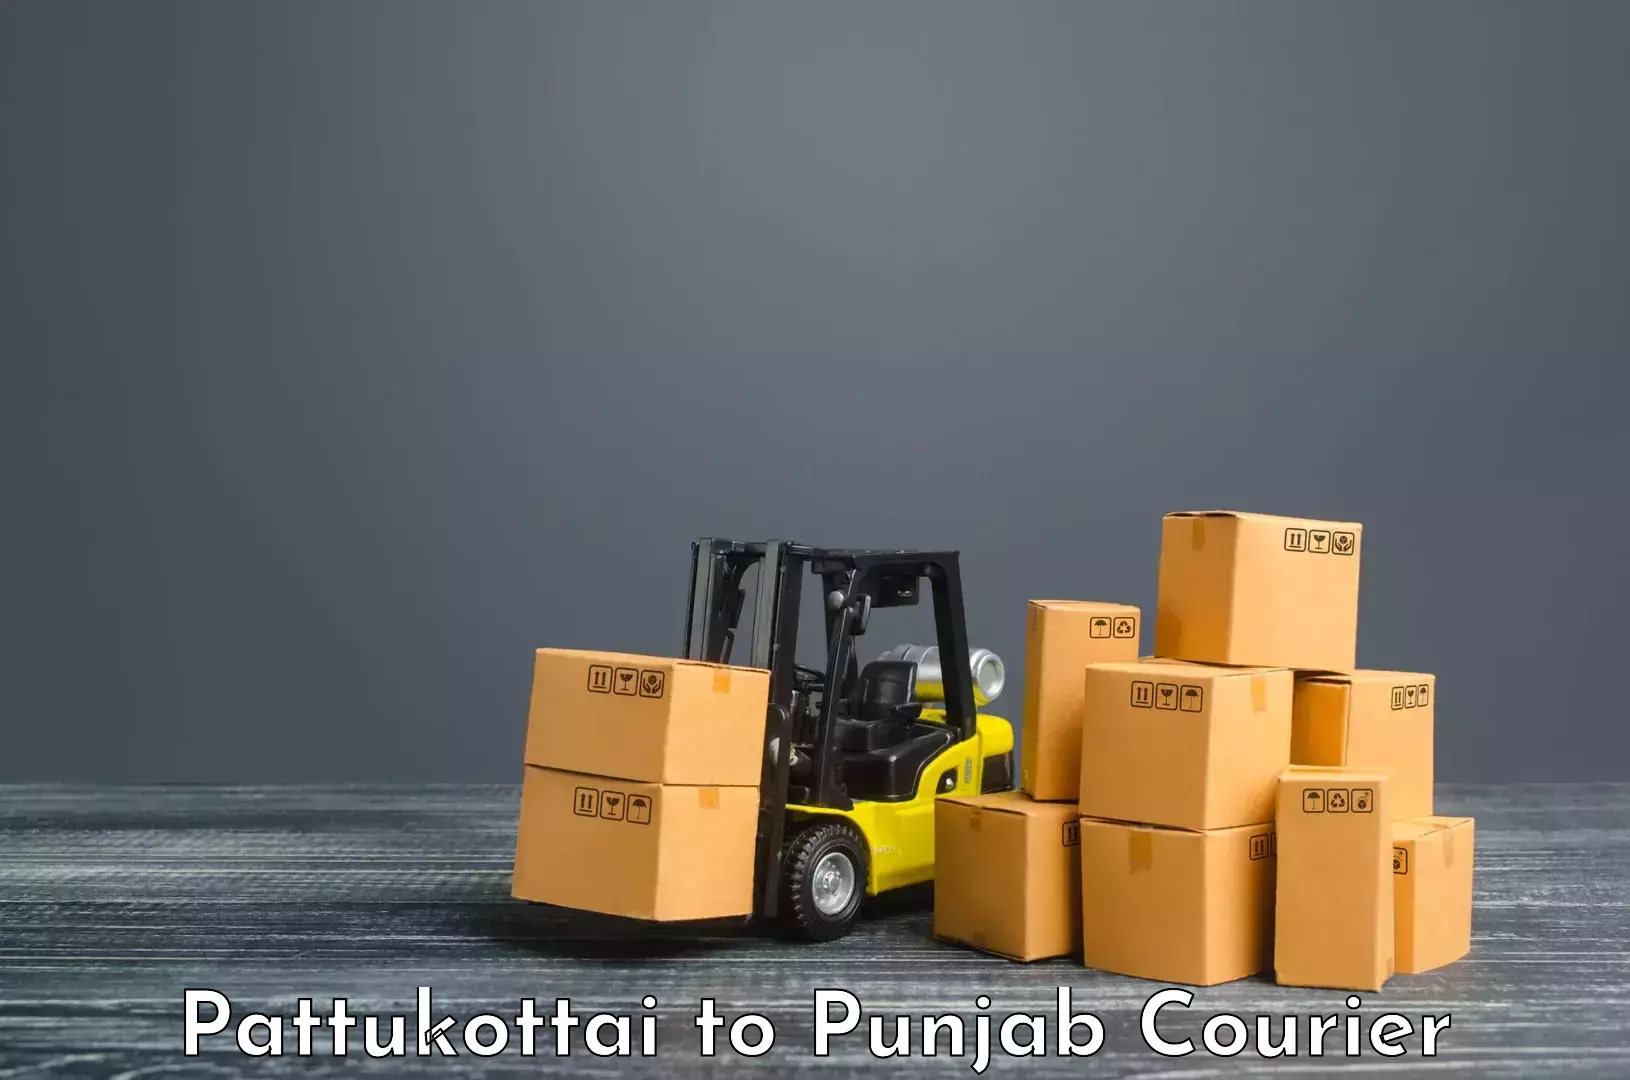 Professional courier services Pattukottai to Anandpur Sahib